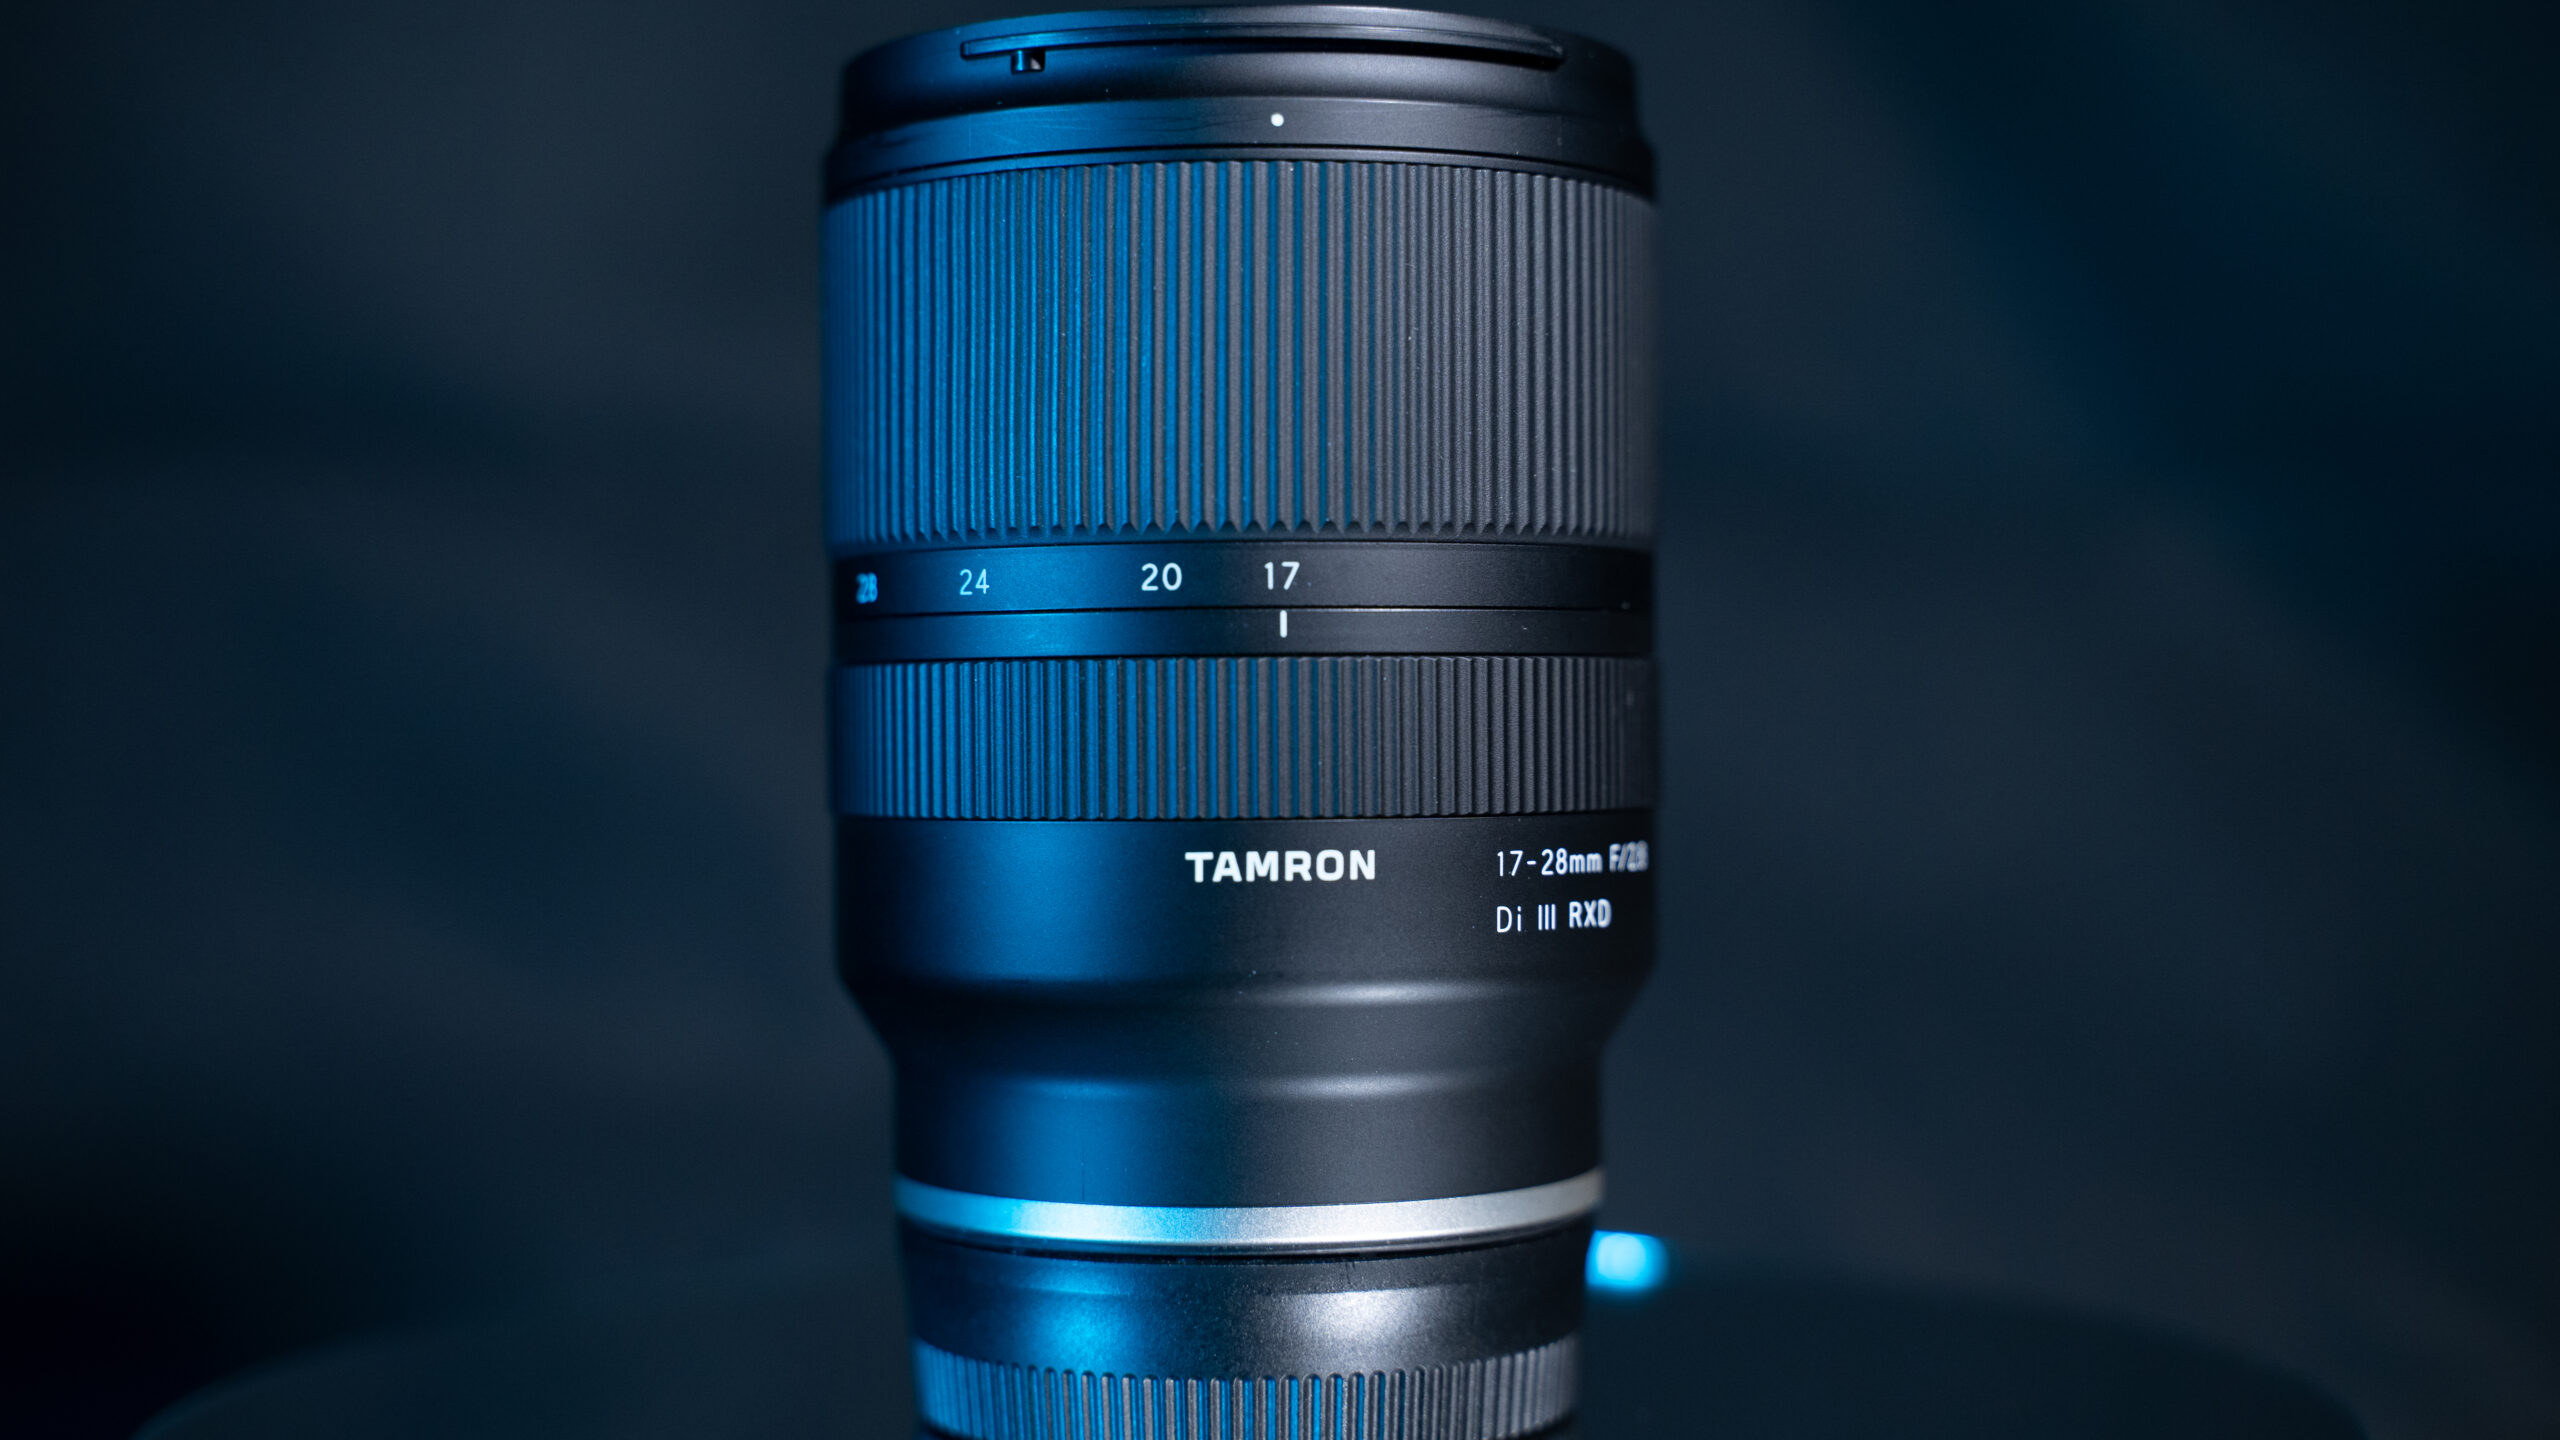 Eマウント】Tamron 17-28mm F/2.8 Di III RXDの性能レビュー、評価 |